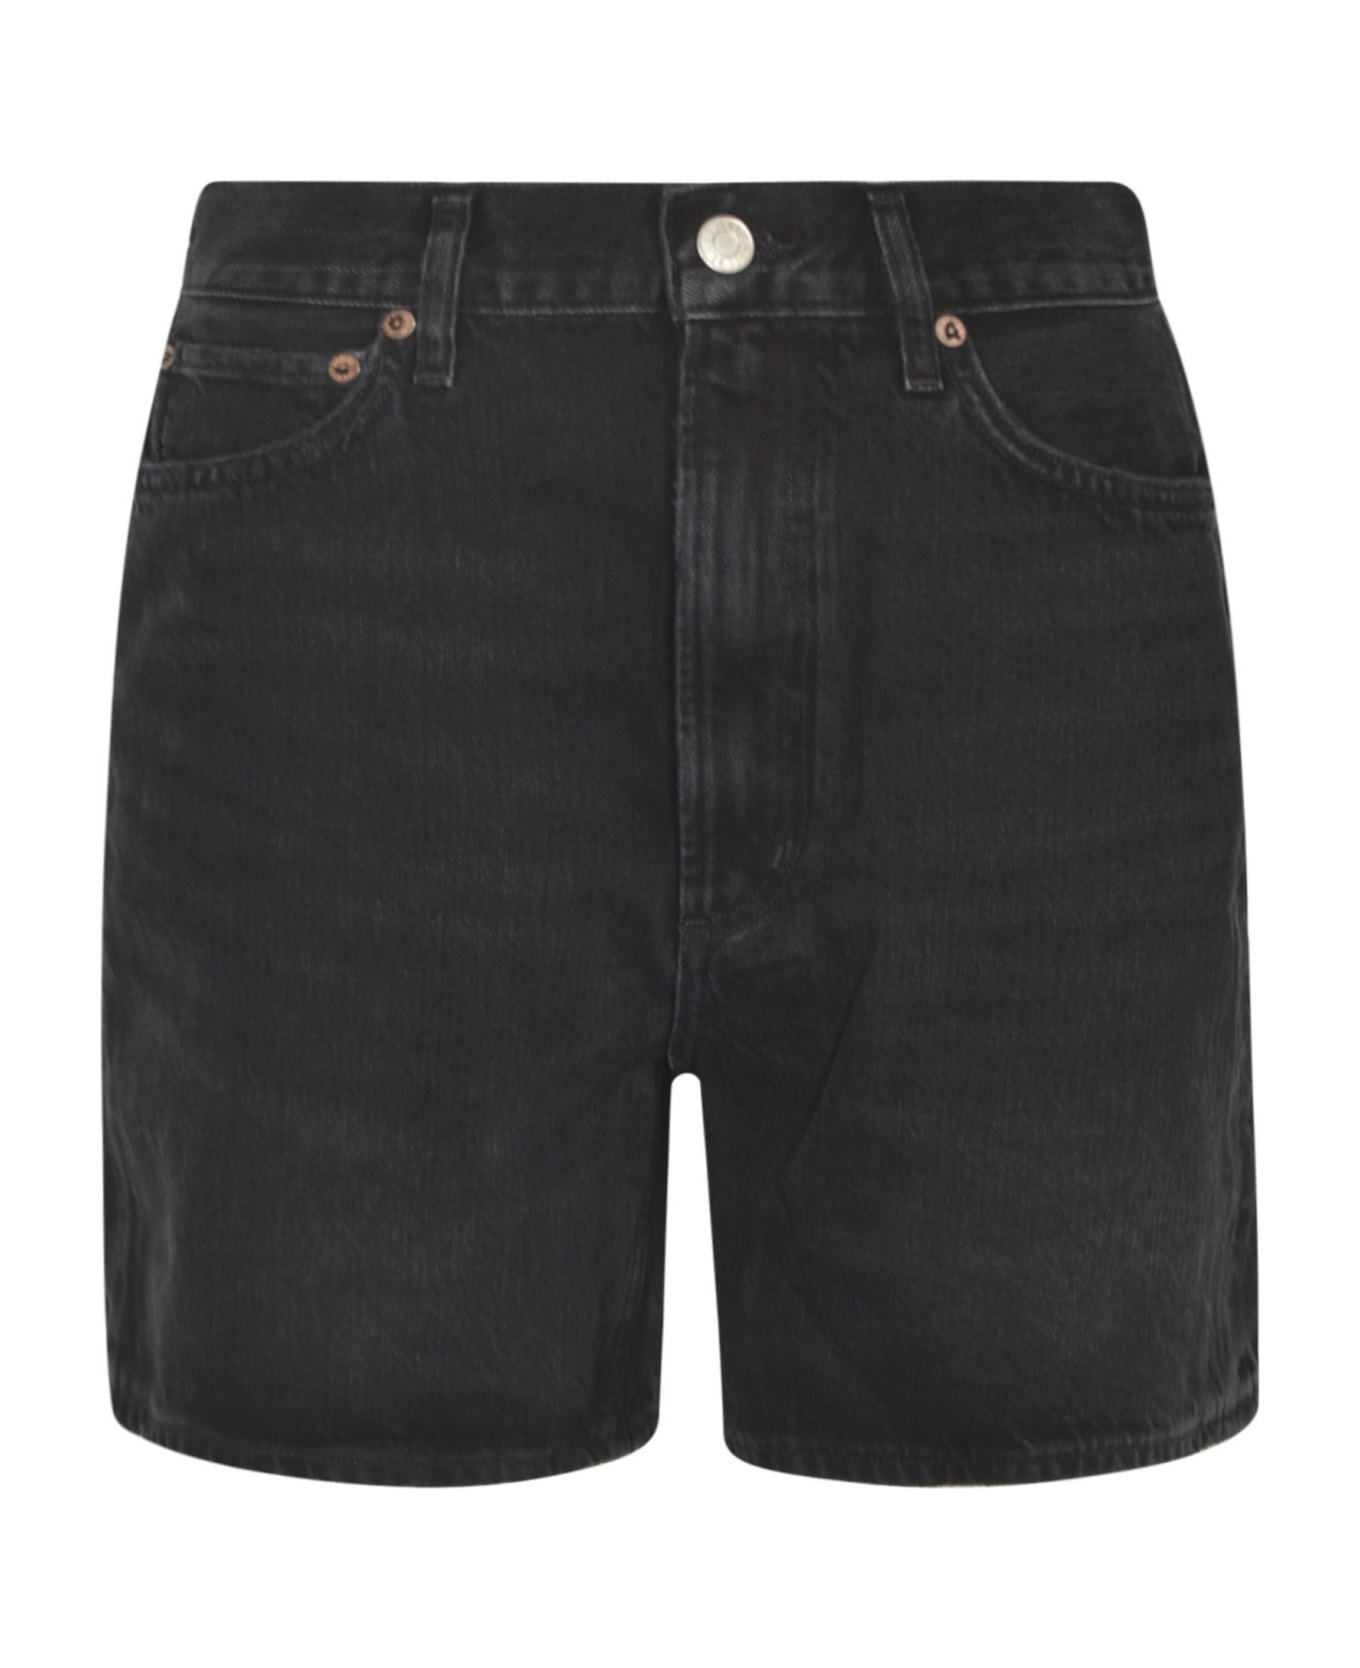 AGOLDE Buttoned Denim Shorts - WASHED BACK ショートパンツ